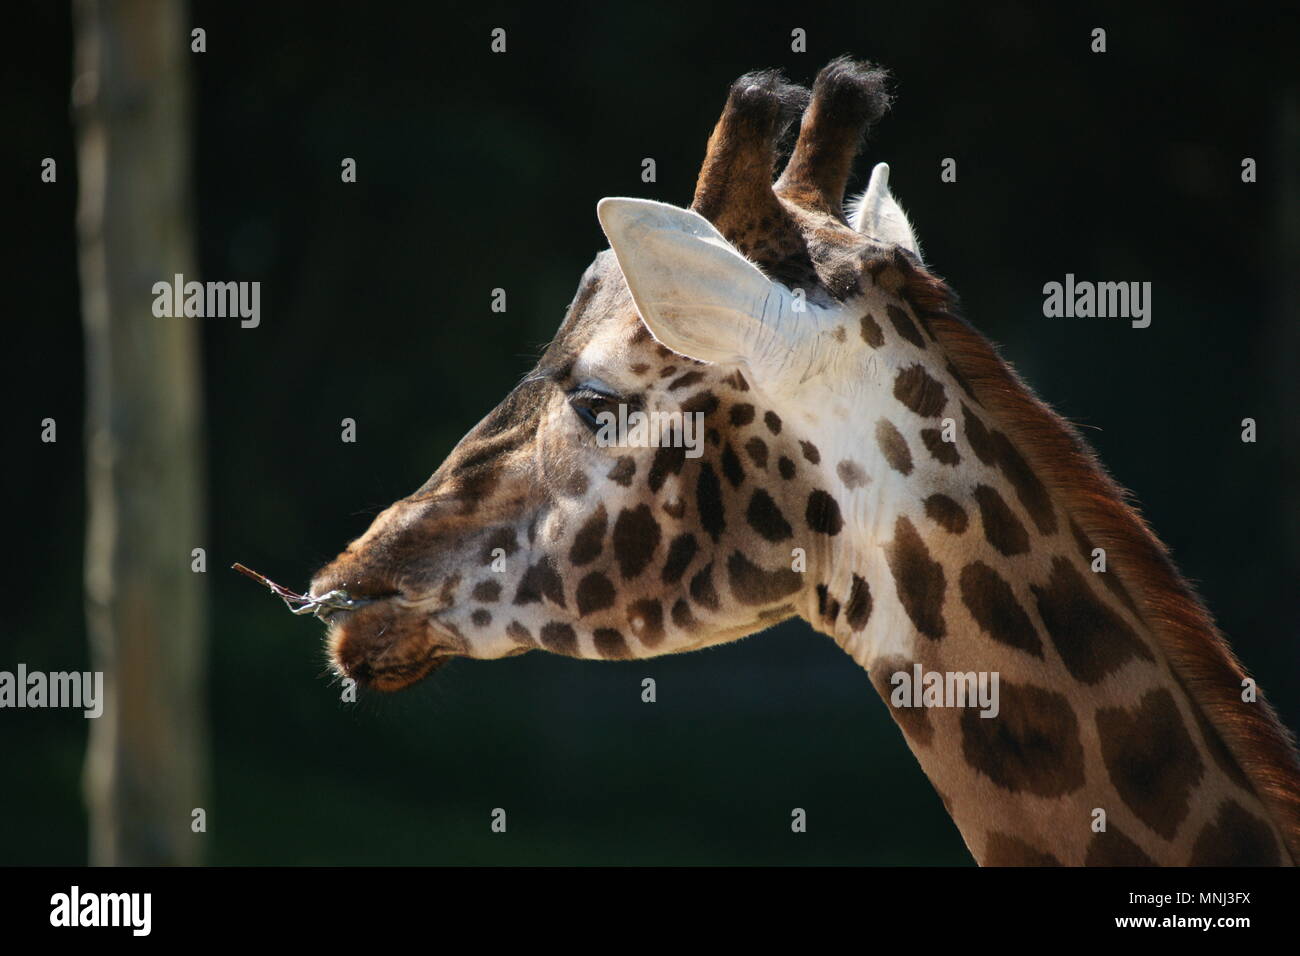 Giraffe close up Stock Photo